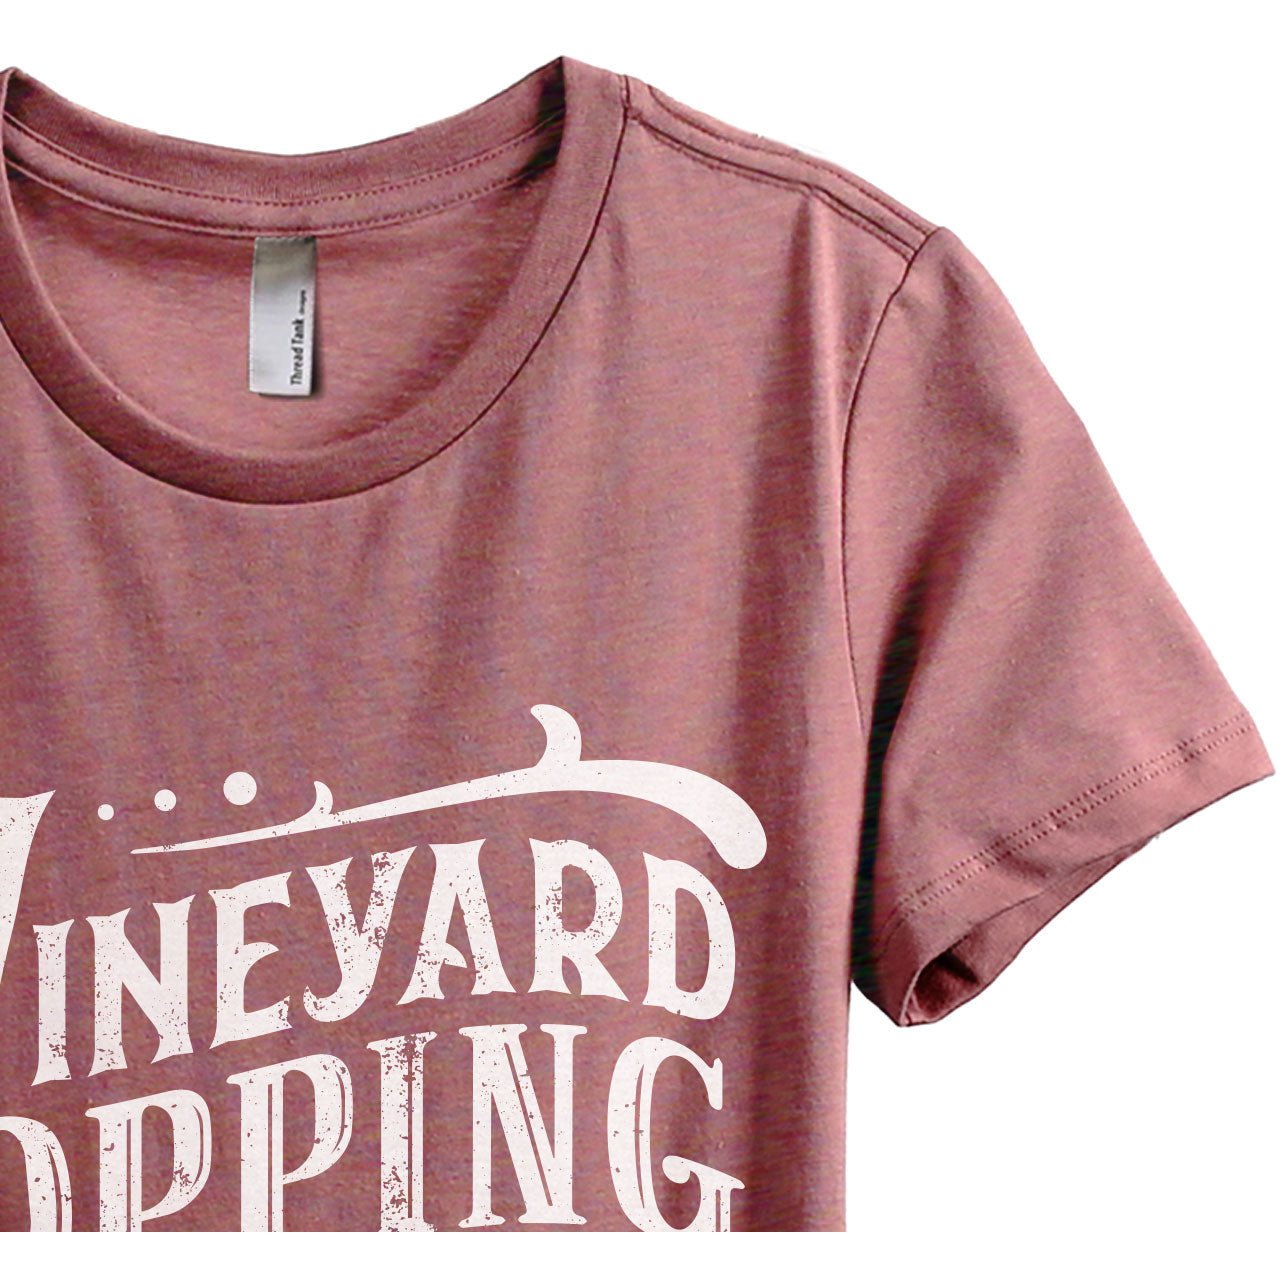 Vineyard Hopping - Stories You Can Wear